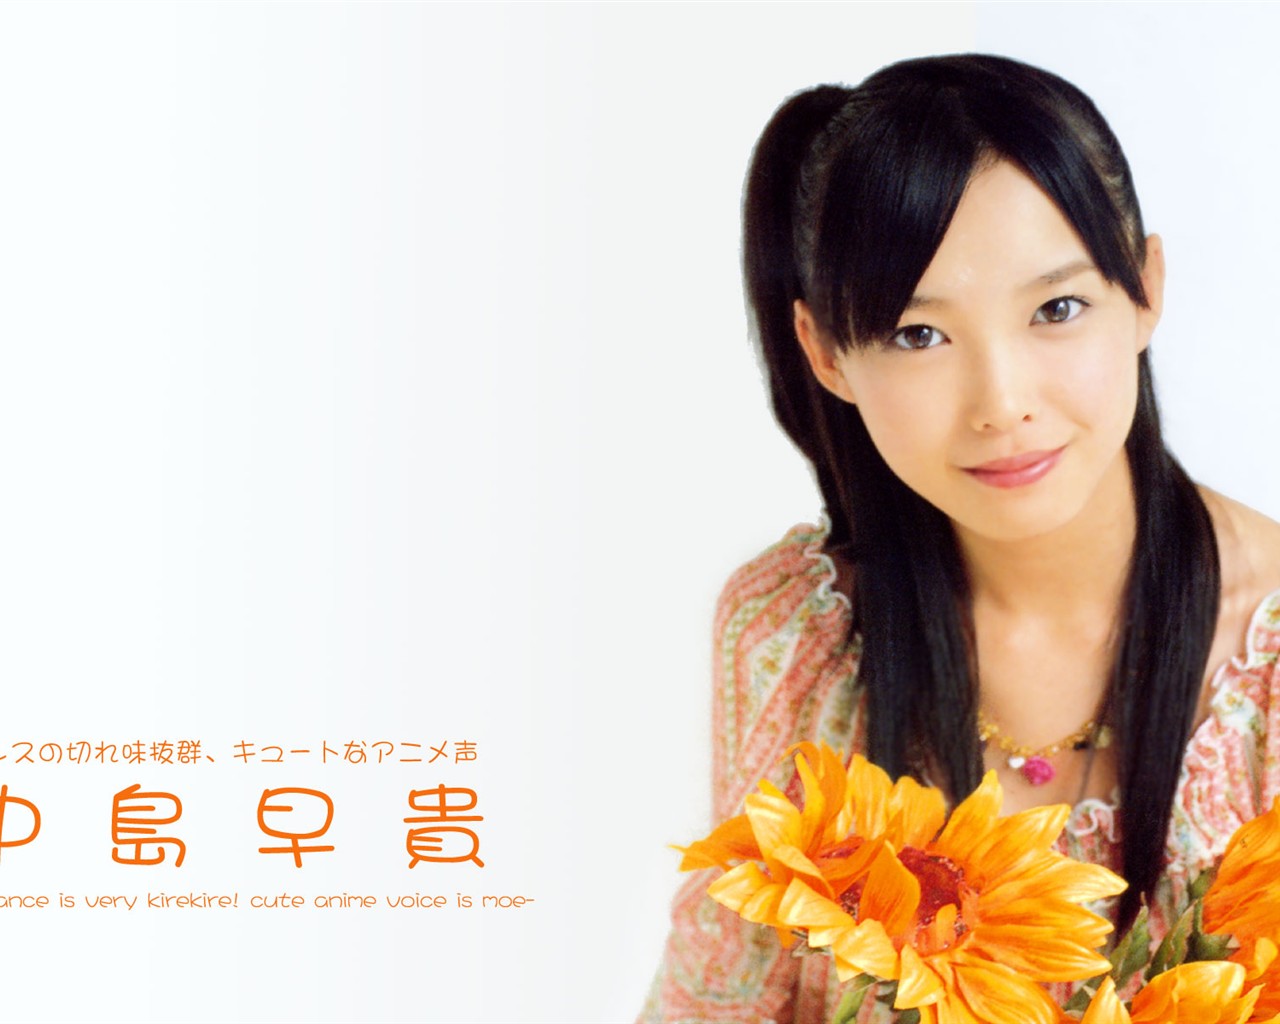 Cute Japanese beauty photo portfolio #15 - 1280x1024